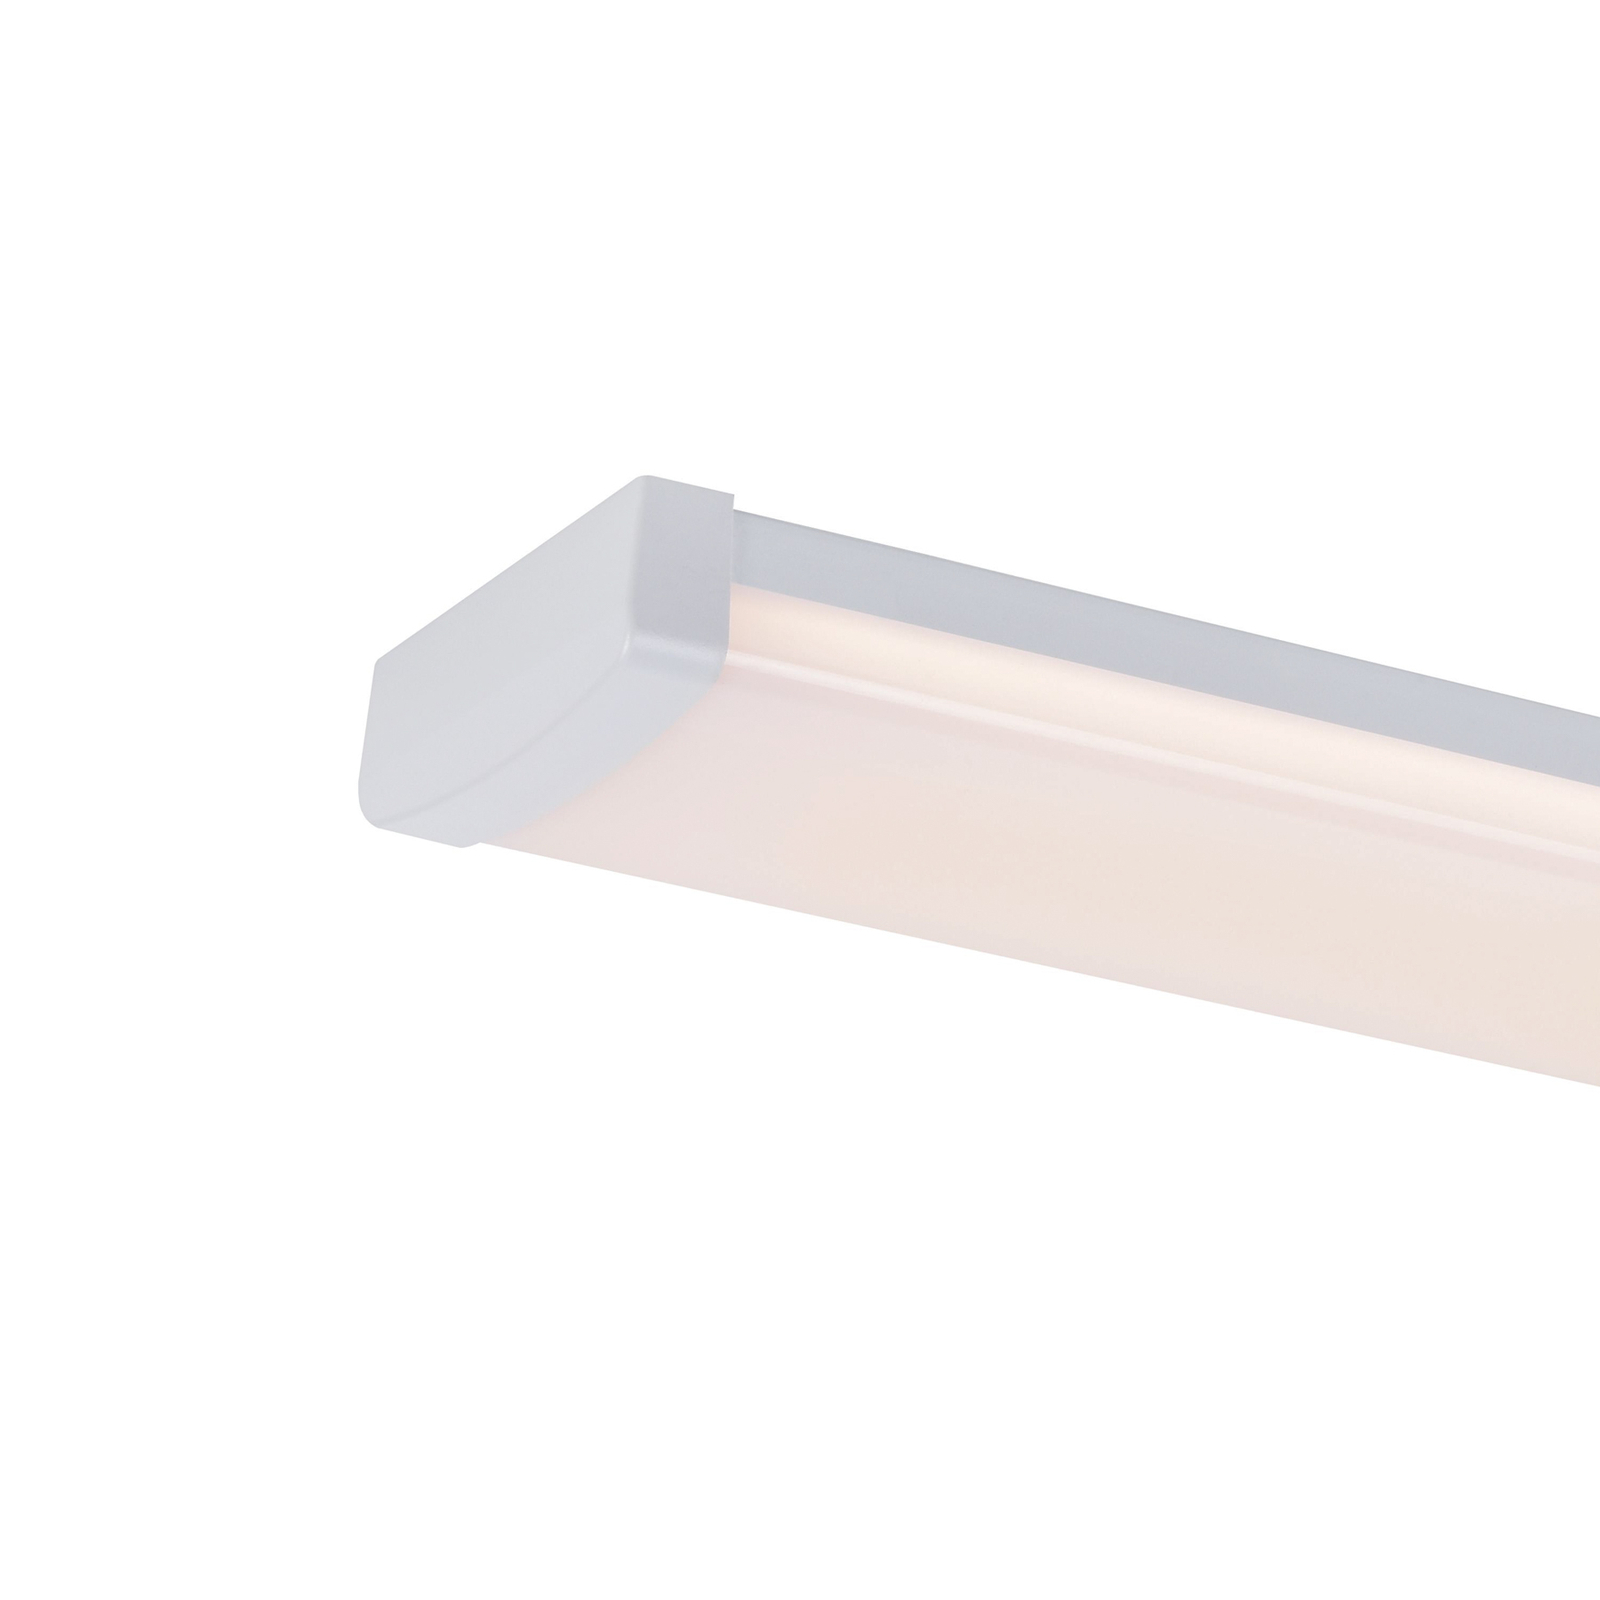 Fita luminosa LED Wilmington, comprimento 90,5 cm, branco, plástico